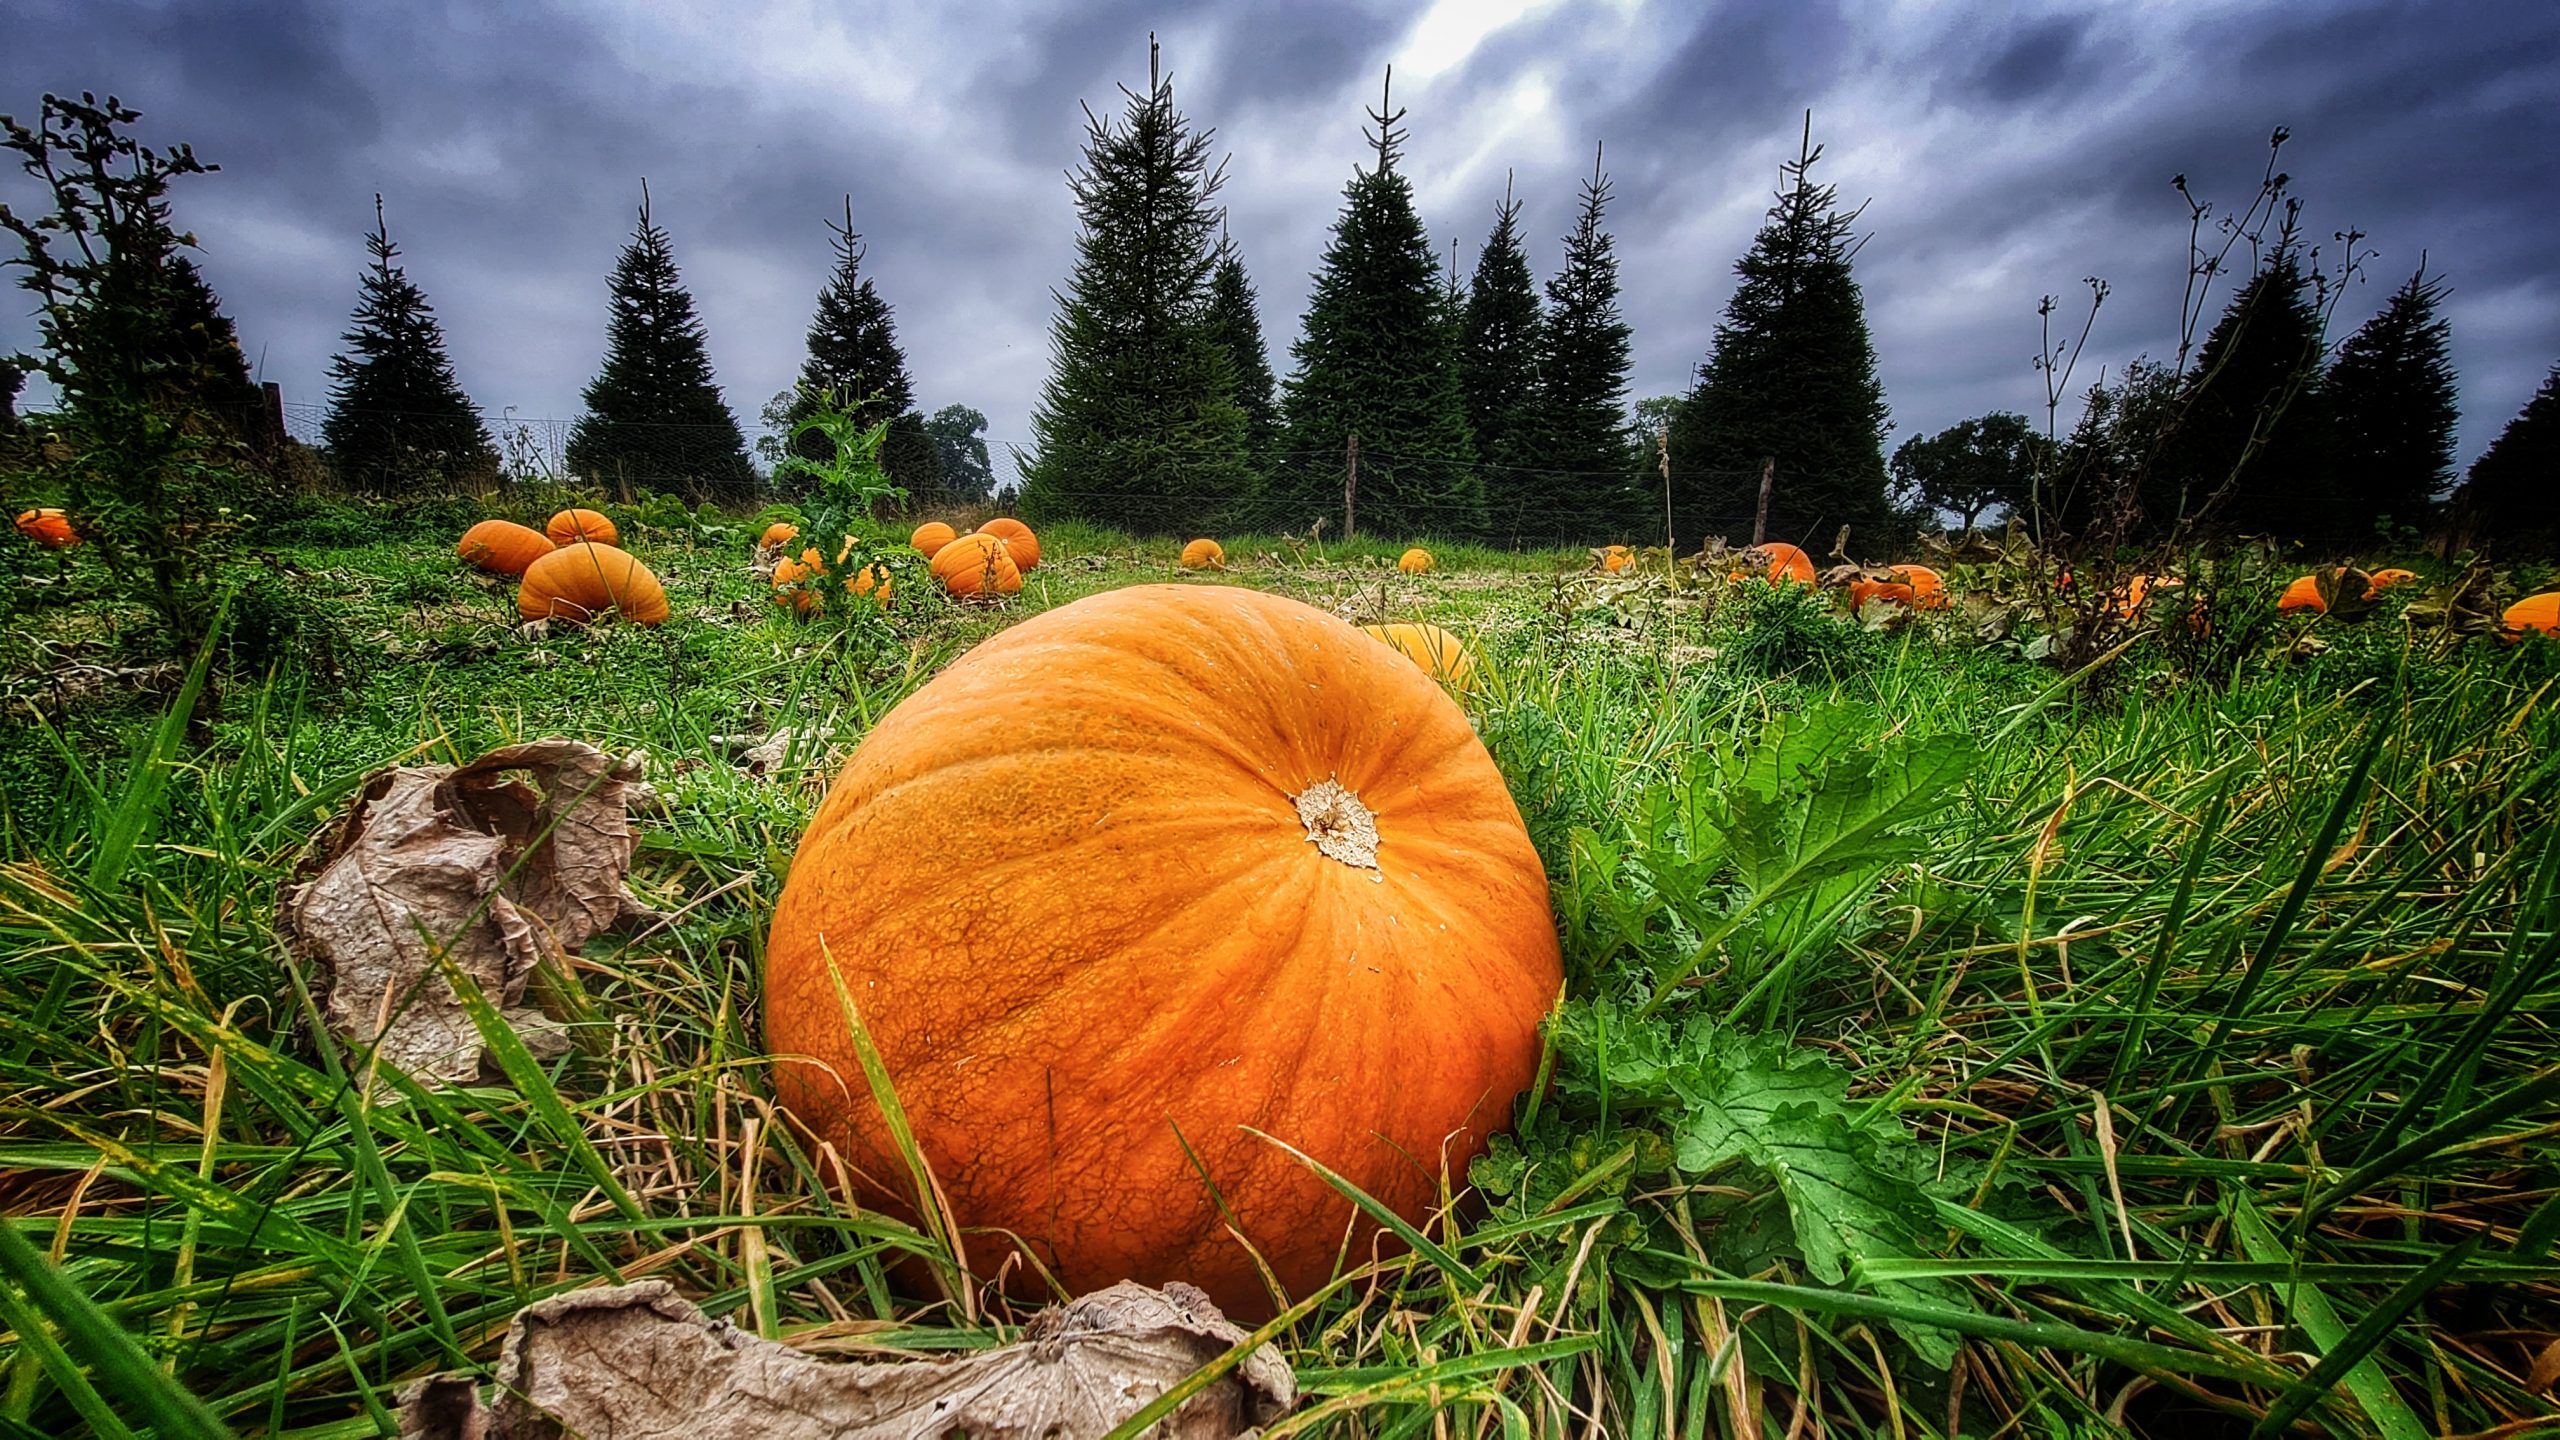 Picture Of a pumpkin